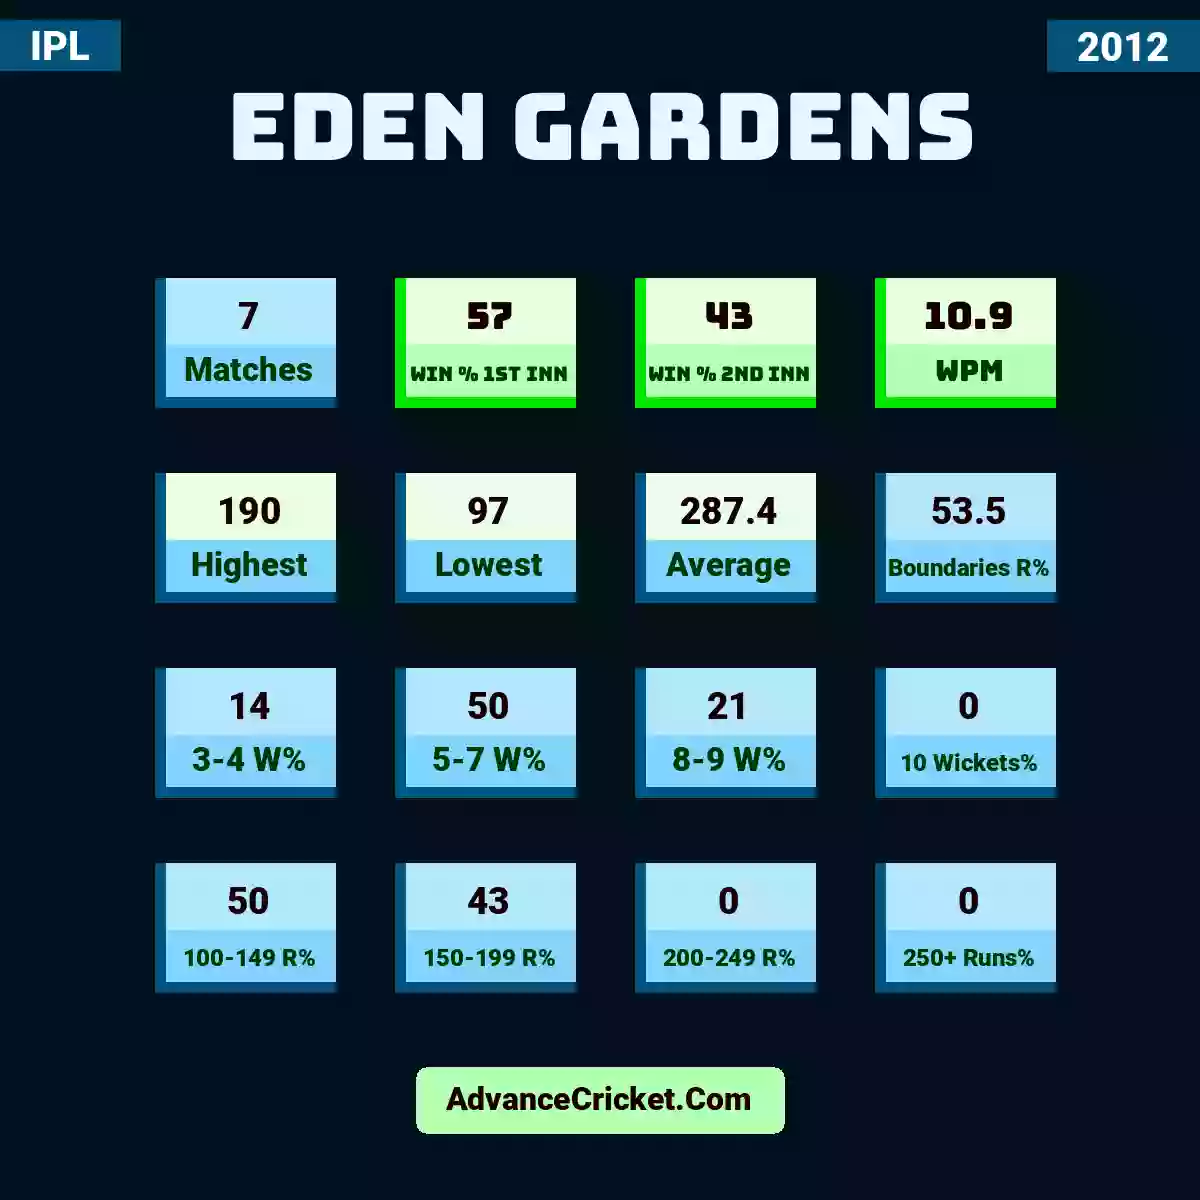 Image showing Eden Gardens with Matches: 7, Win % 1st Inn: 57, Win % 2nd Inn: 43, WPM: 10.9, Highest: 190, Lowest: 97, Average: 287.4, Boundaries R%: 53.5, 3-4 W%: 14, 5-7 W%: 50, 8-9 W%: 21, 10 Wickets%: 0, 100-149 R%: 50, 150-199 R%: 43, 200-249 R%: 0, 250+ Runs%: 0.